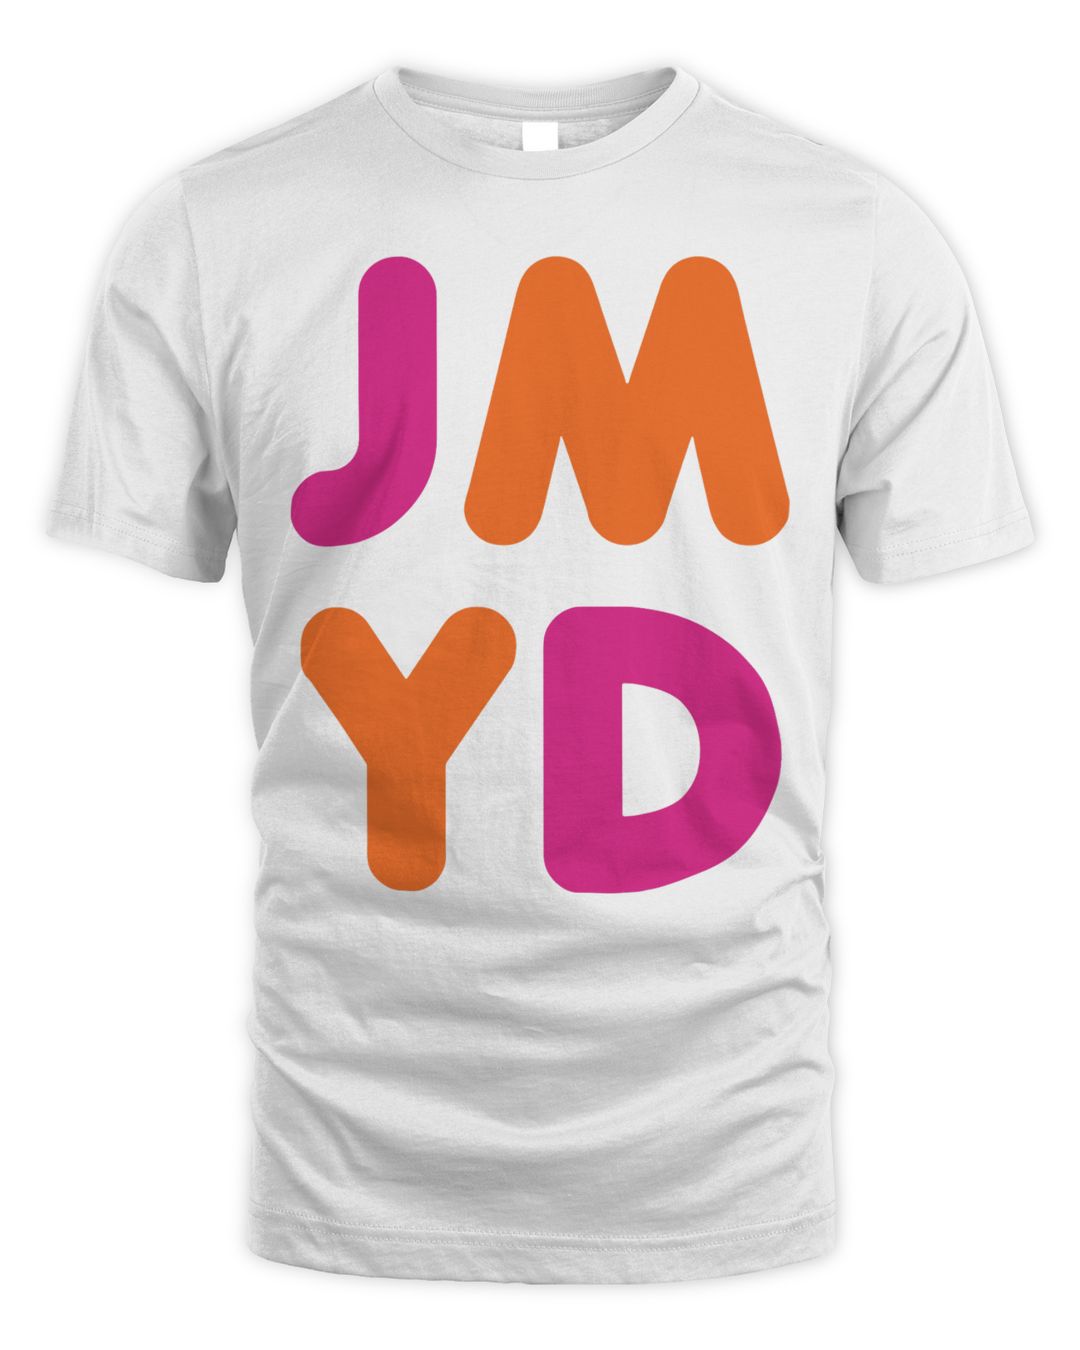 Ymh Merch It’s Time to Jmyd Shirt